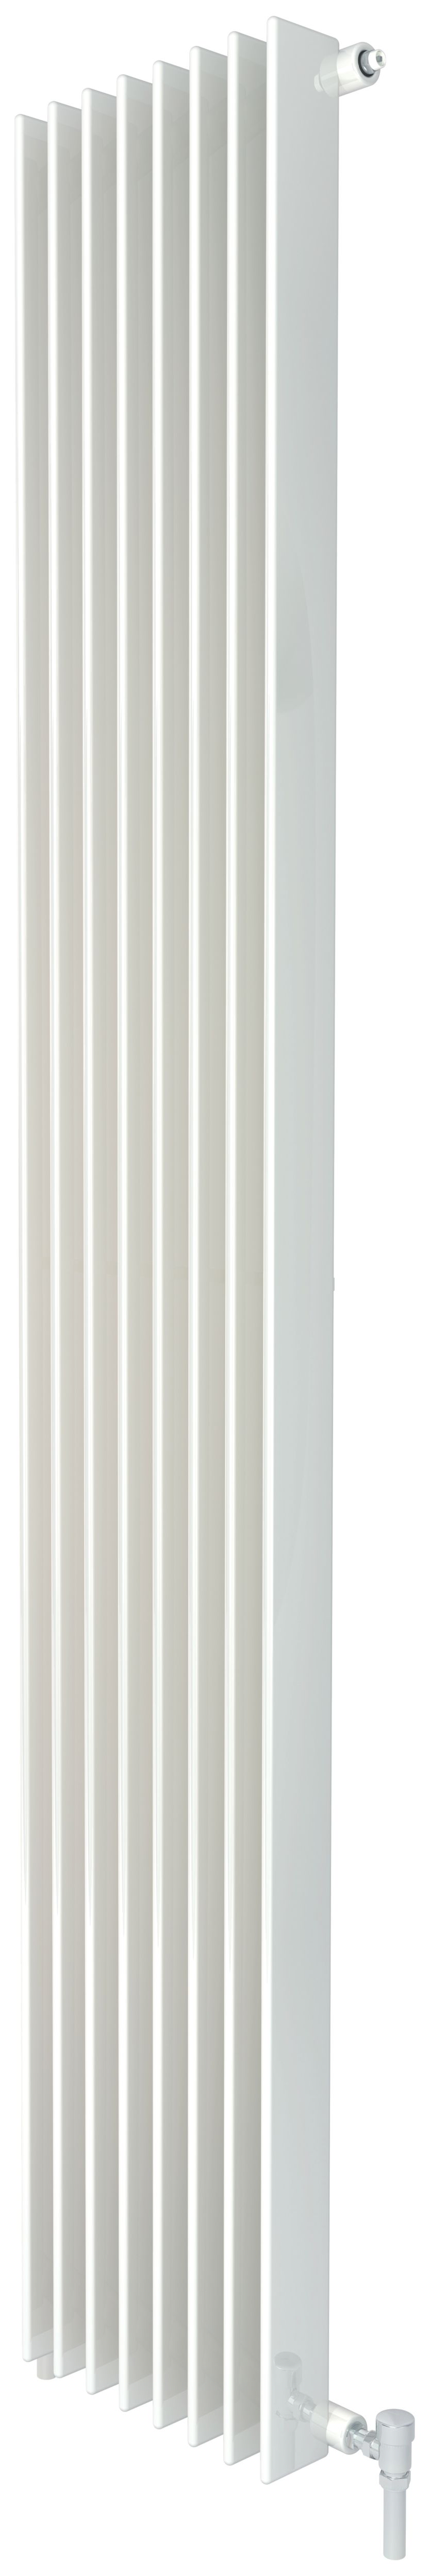 Henrad Verona Slim Single Panel Vertical Designer Radiator - White 1800 x 640 mm